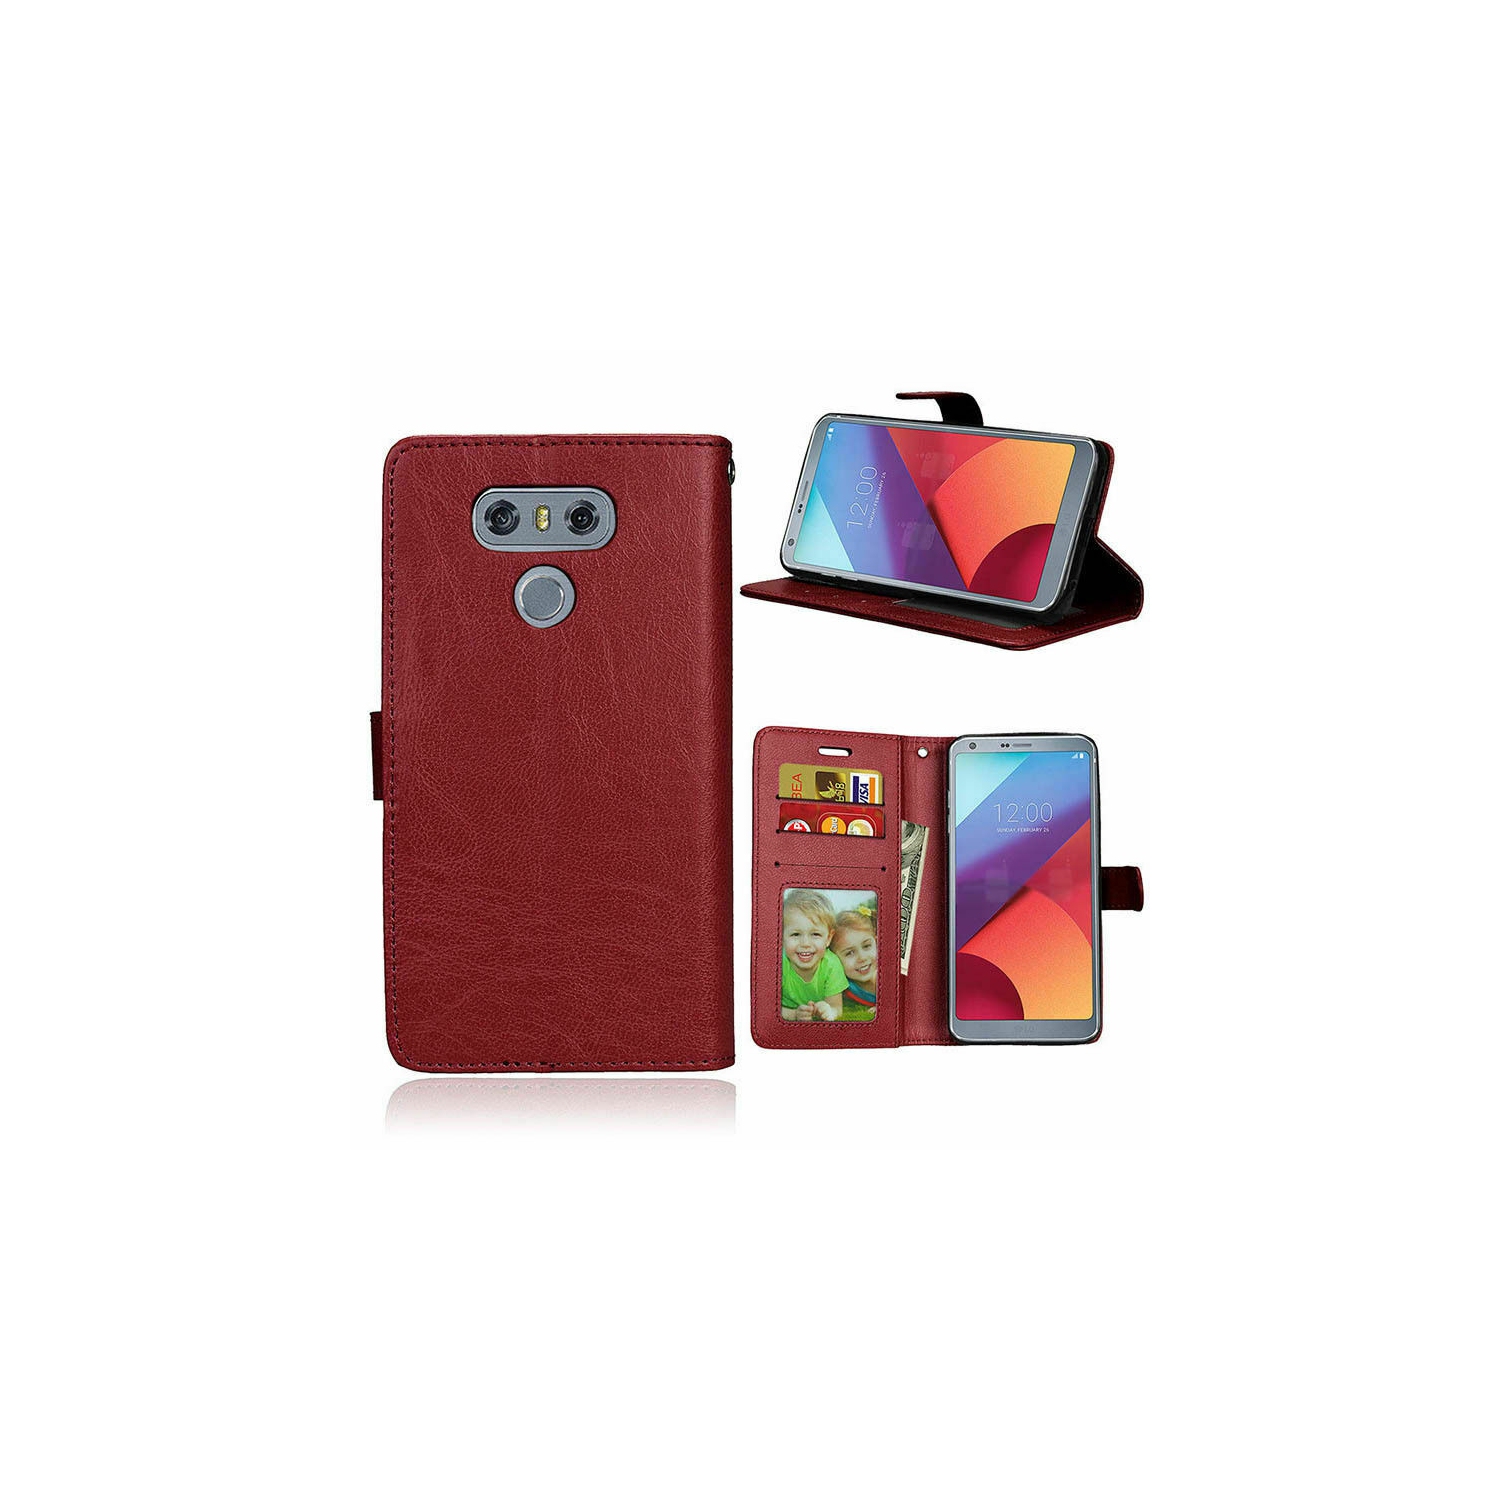 【CSmart】 Magnetic Card Slot Leather Folio Wallet Flip Case Cover for LG G5, Brown